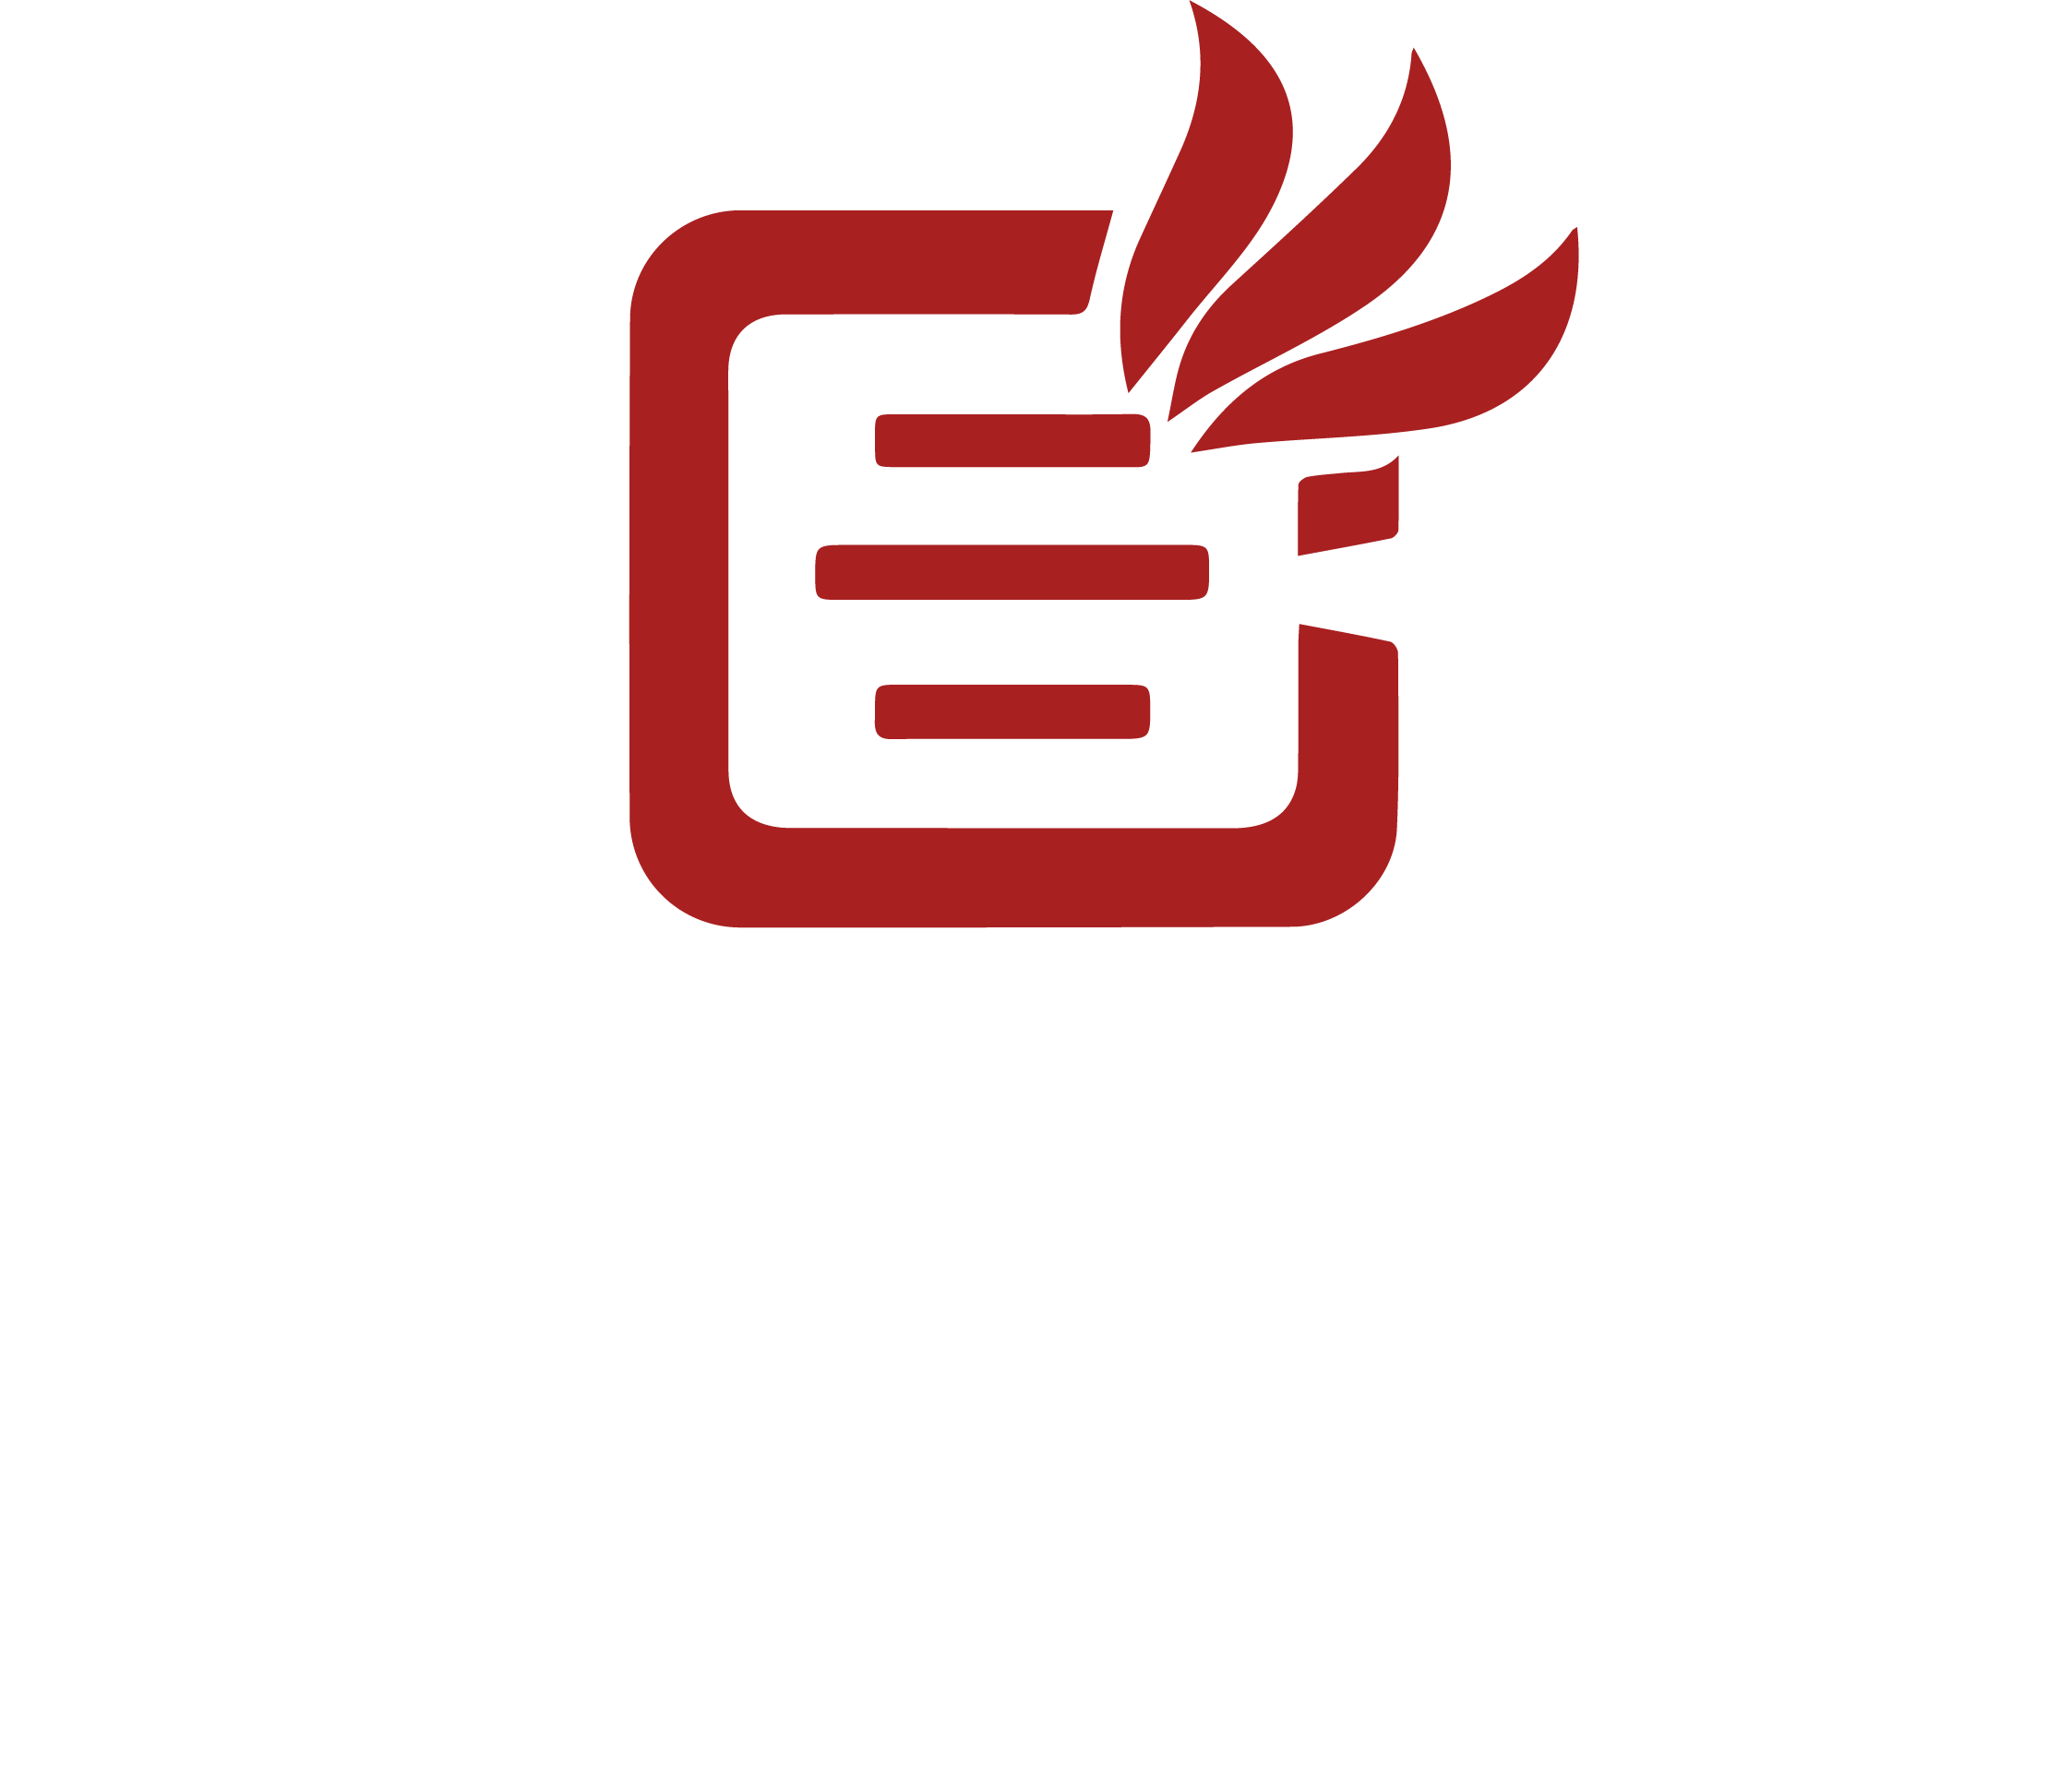 Grillcorp